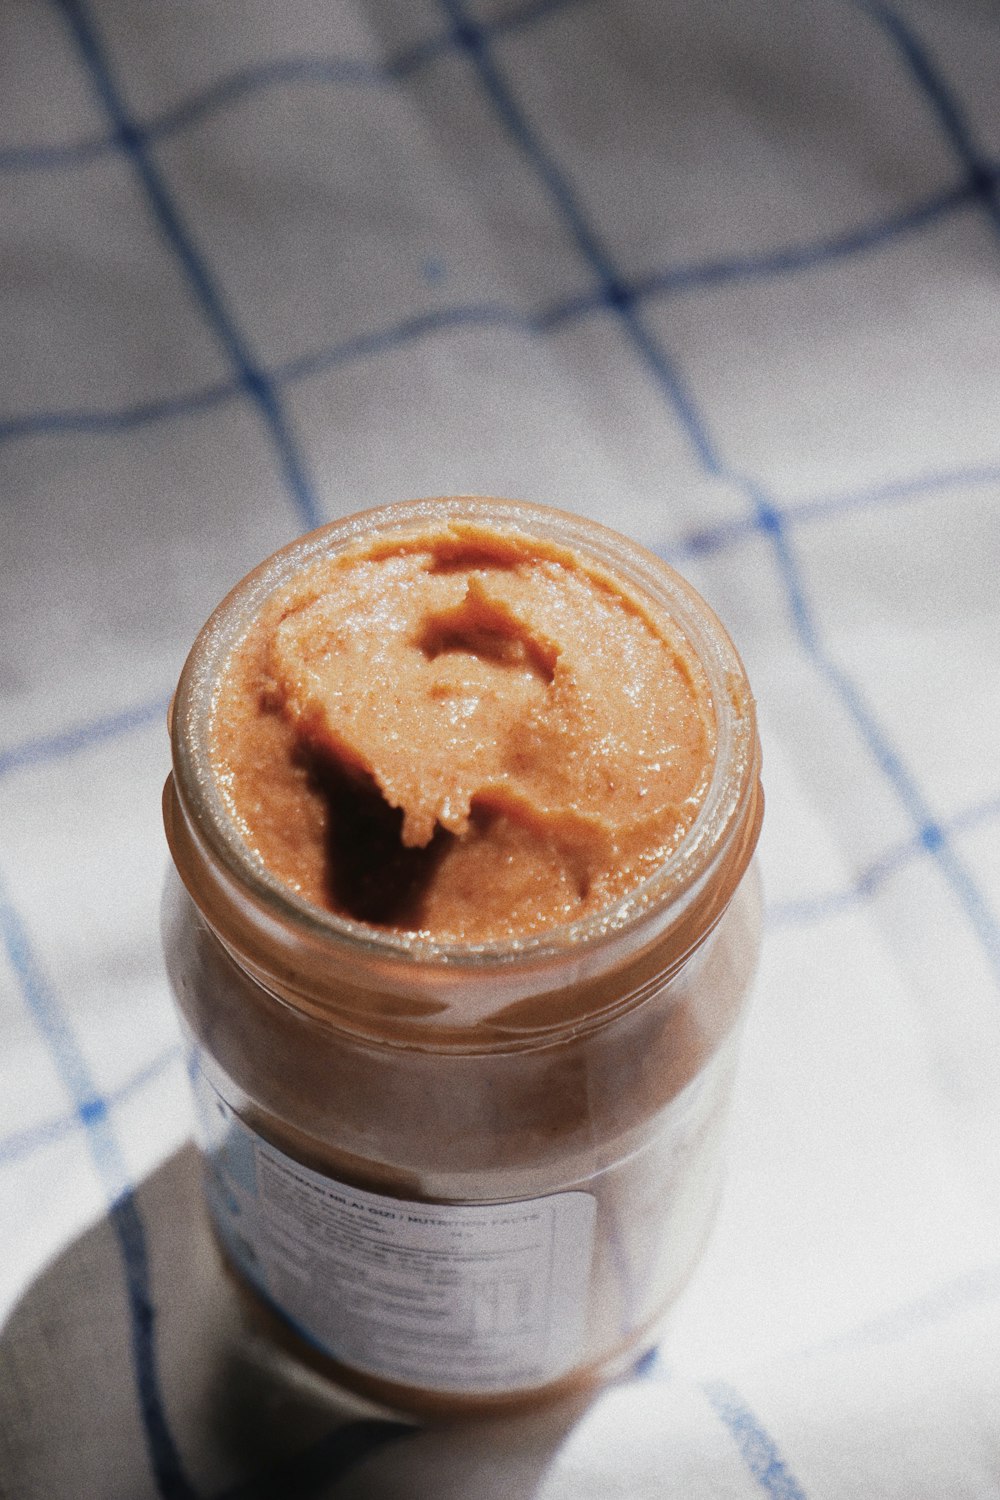 brown powder in clear glass jar